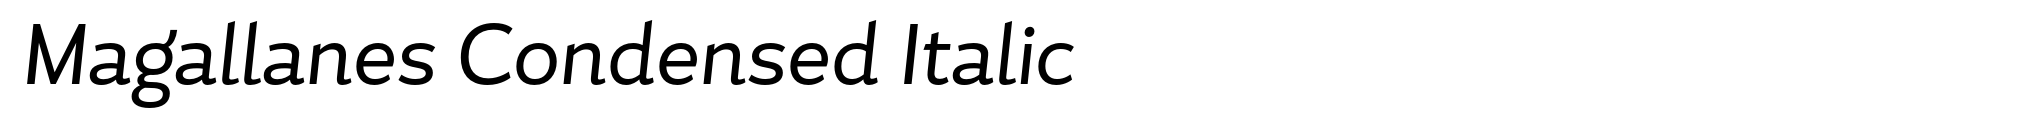 Magallanes Condensed Italic image